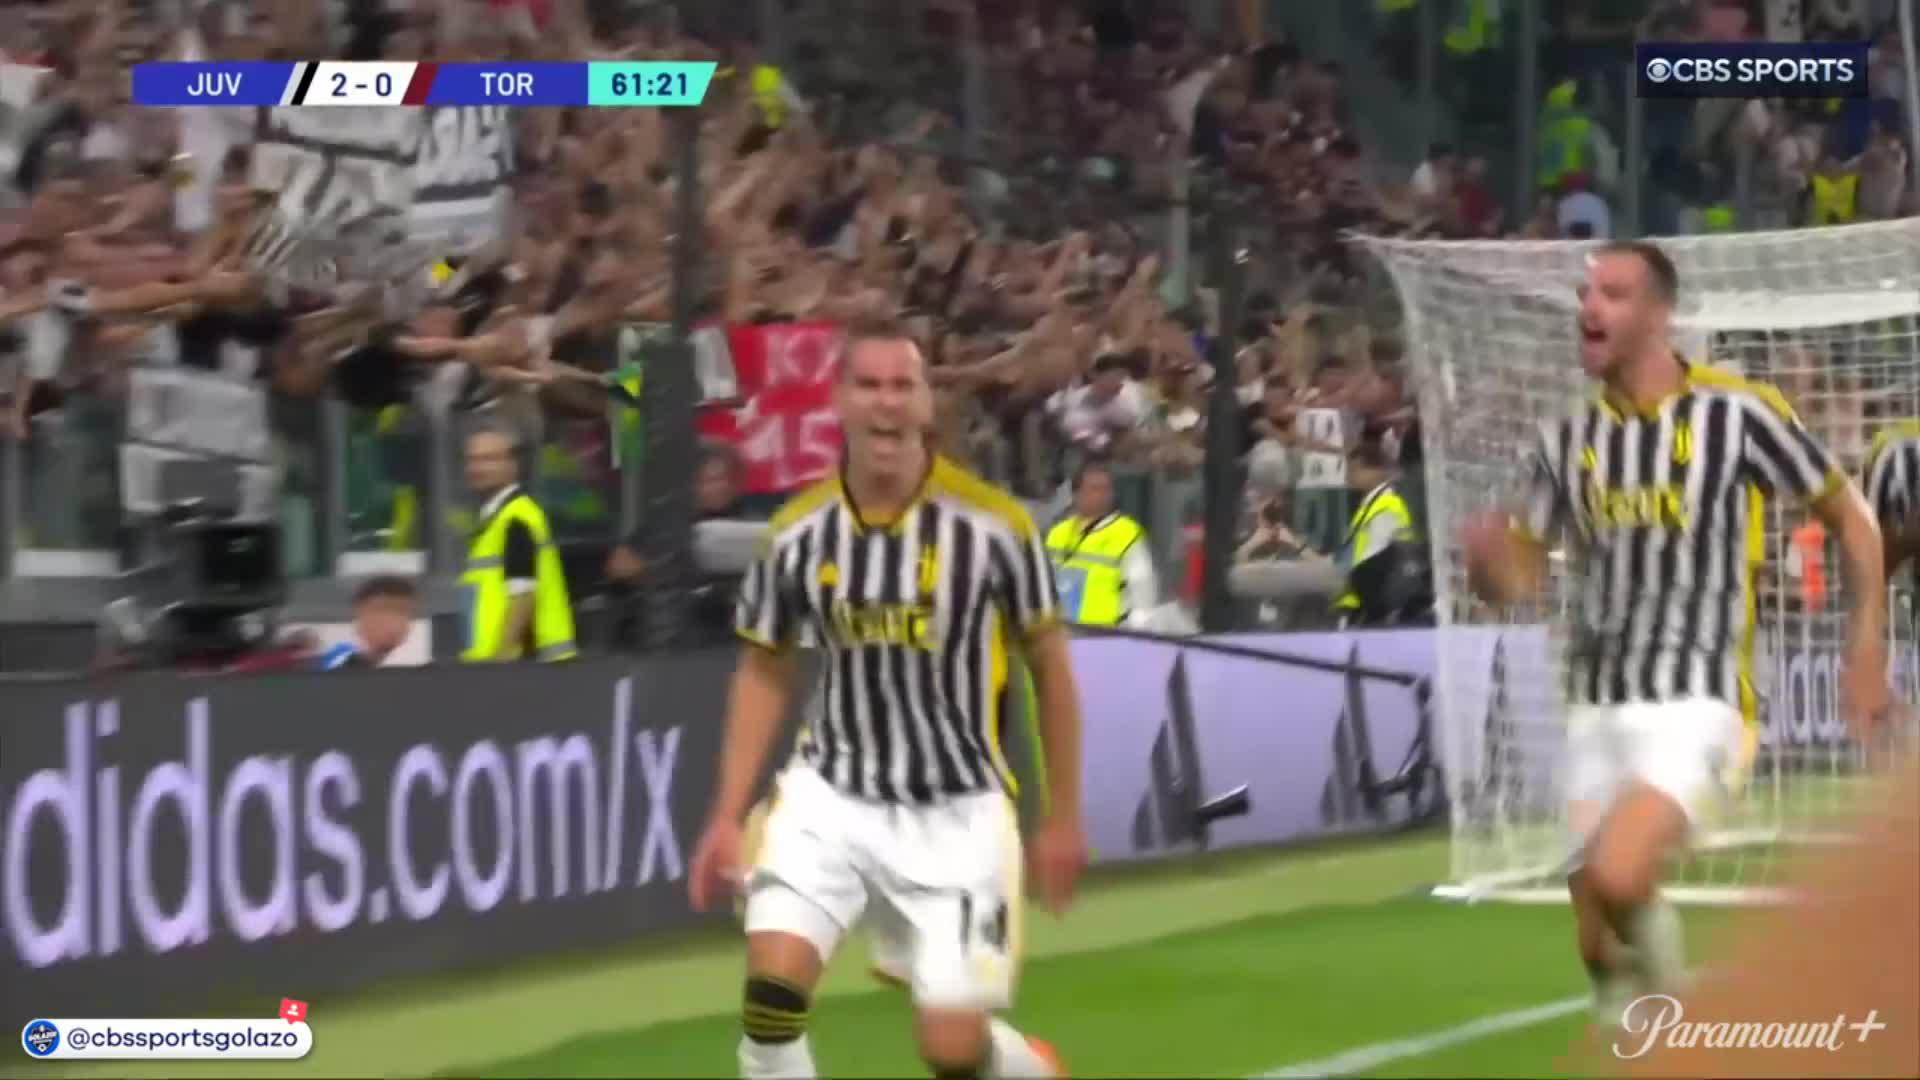 Arkadiusz Milik rises highest to double Juventus' lead ⚫⚪